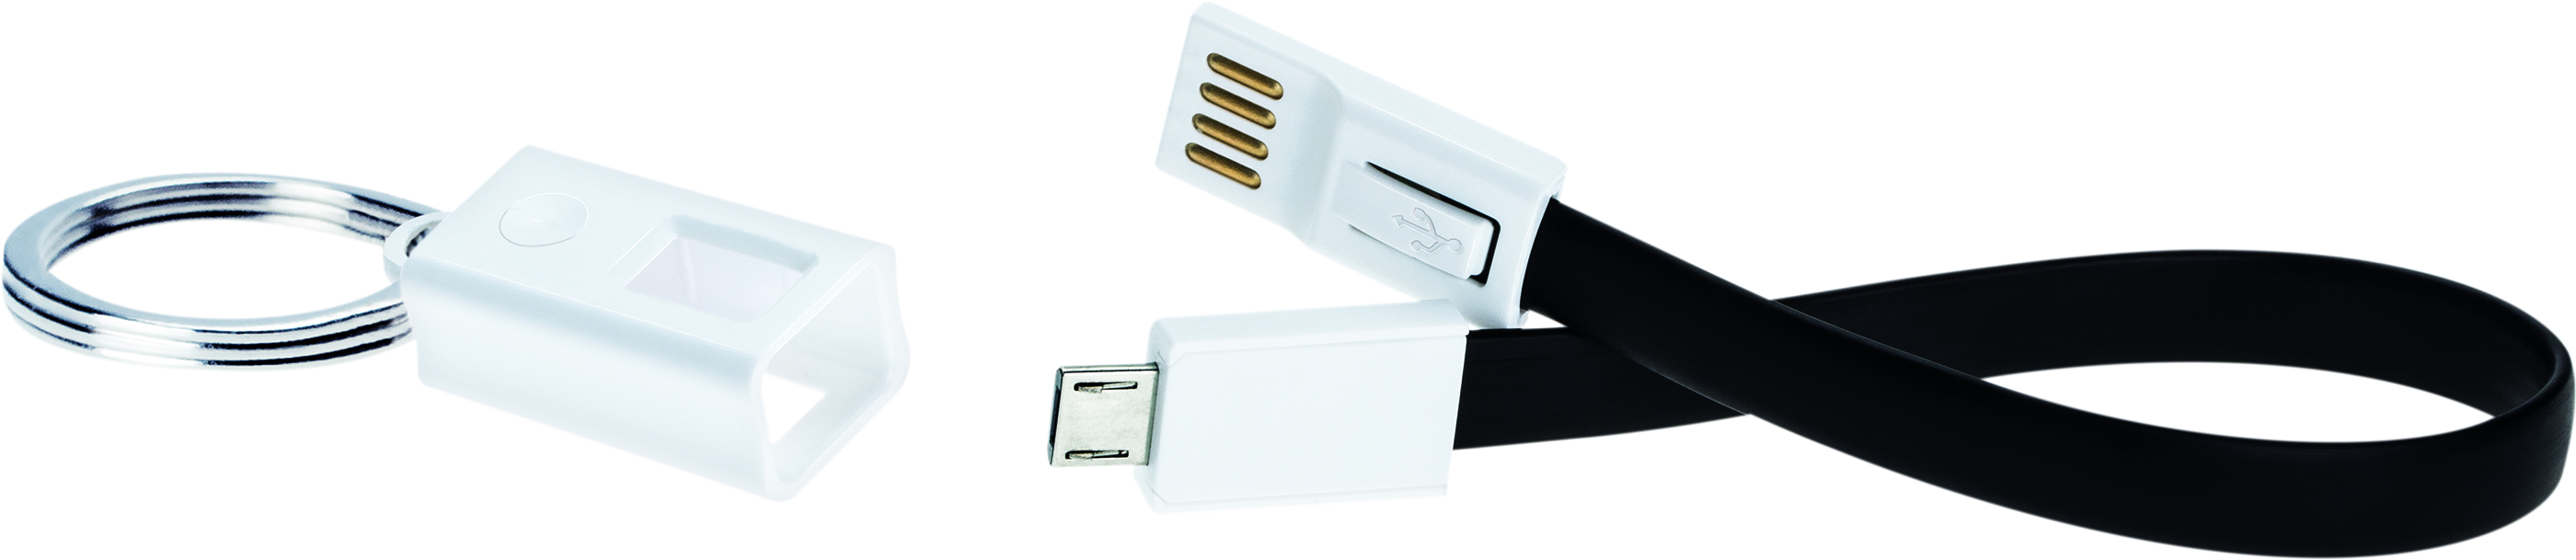 Keychain Micro USB cable